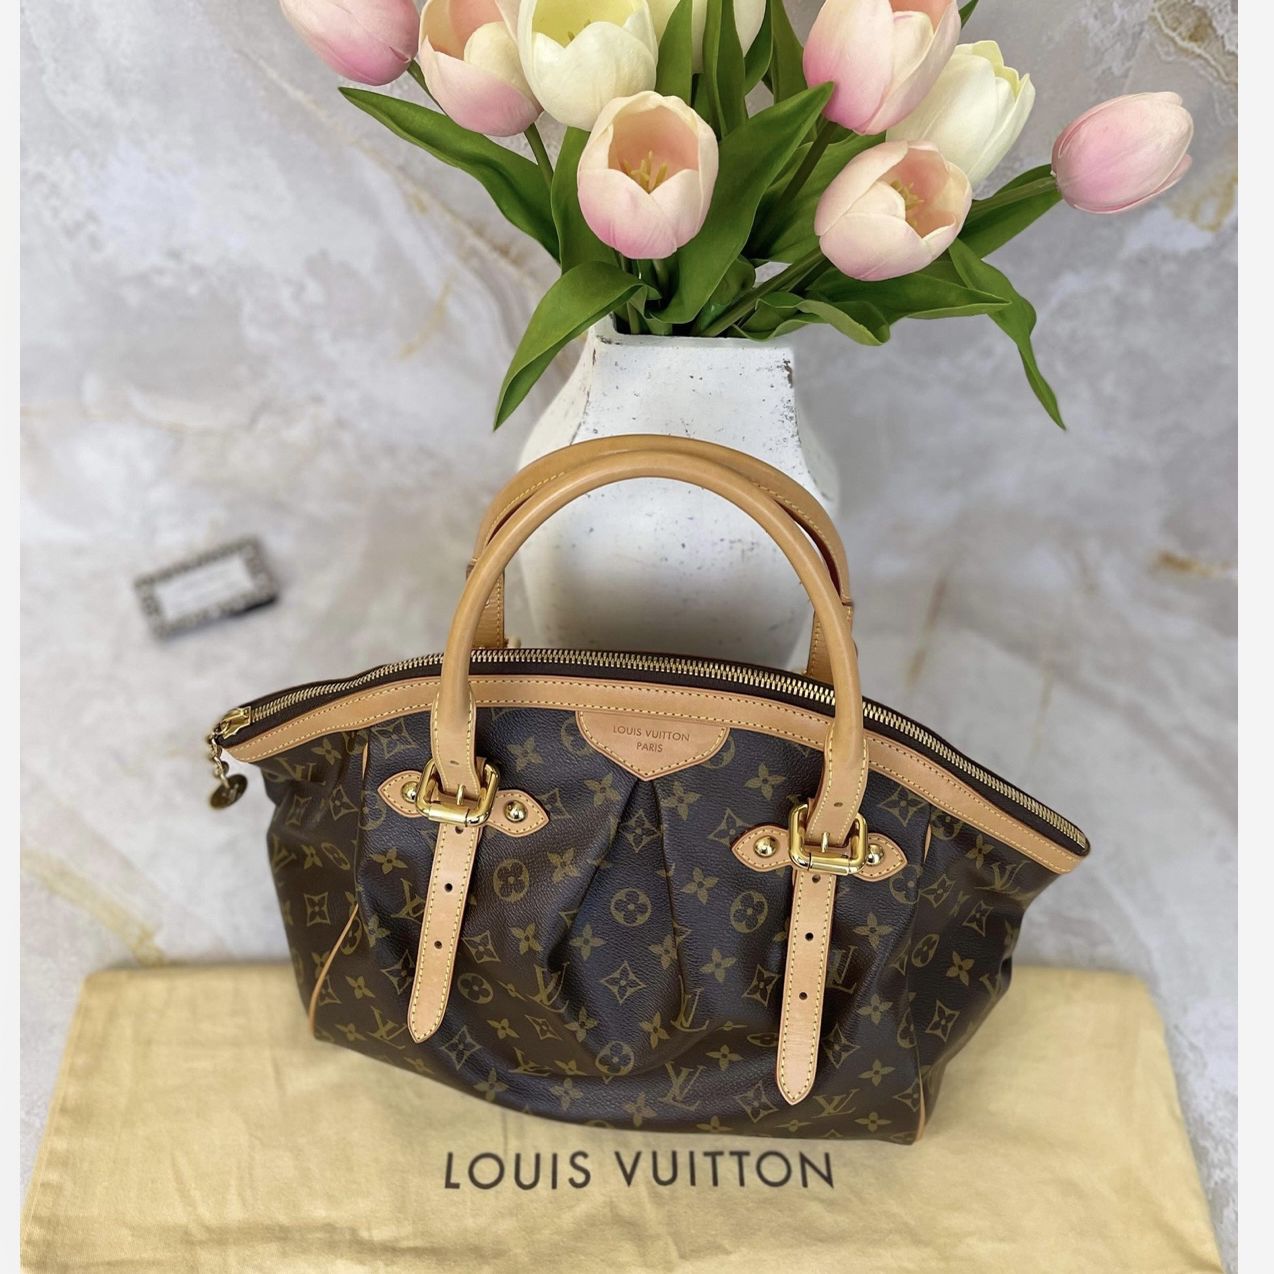 Louis Vuitton Tivoli Bag for Sale in Long Beach, CA - OfferUp